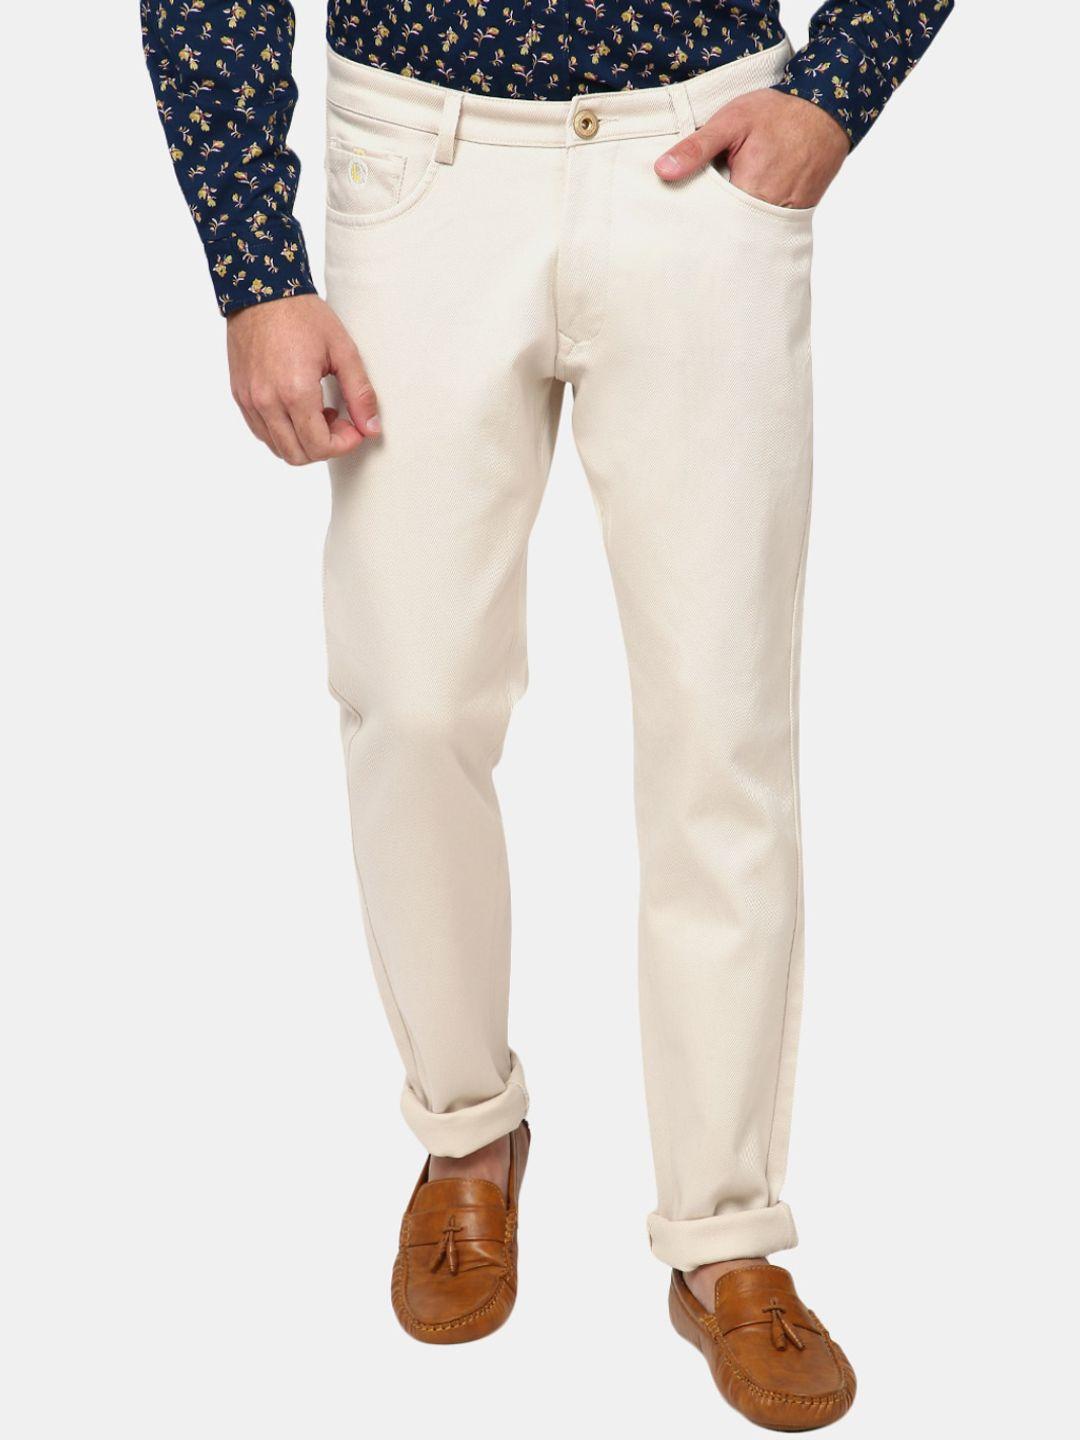 v-mart-men-cream-coloured-chinos-trousers